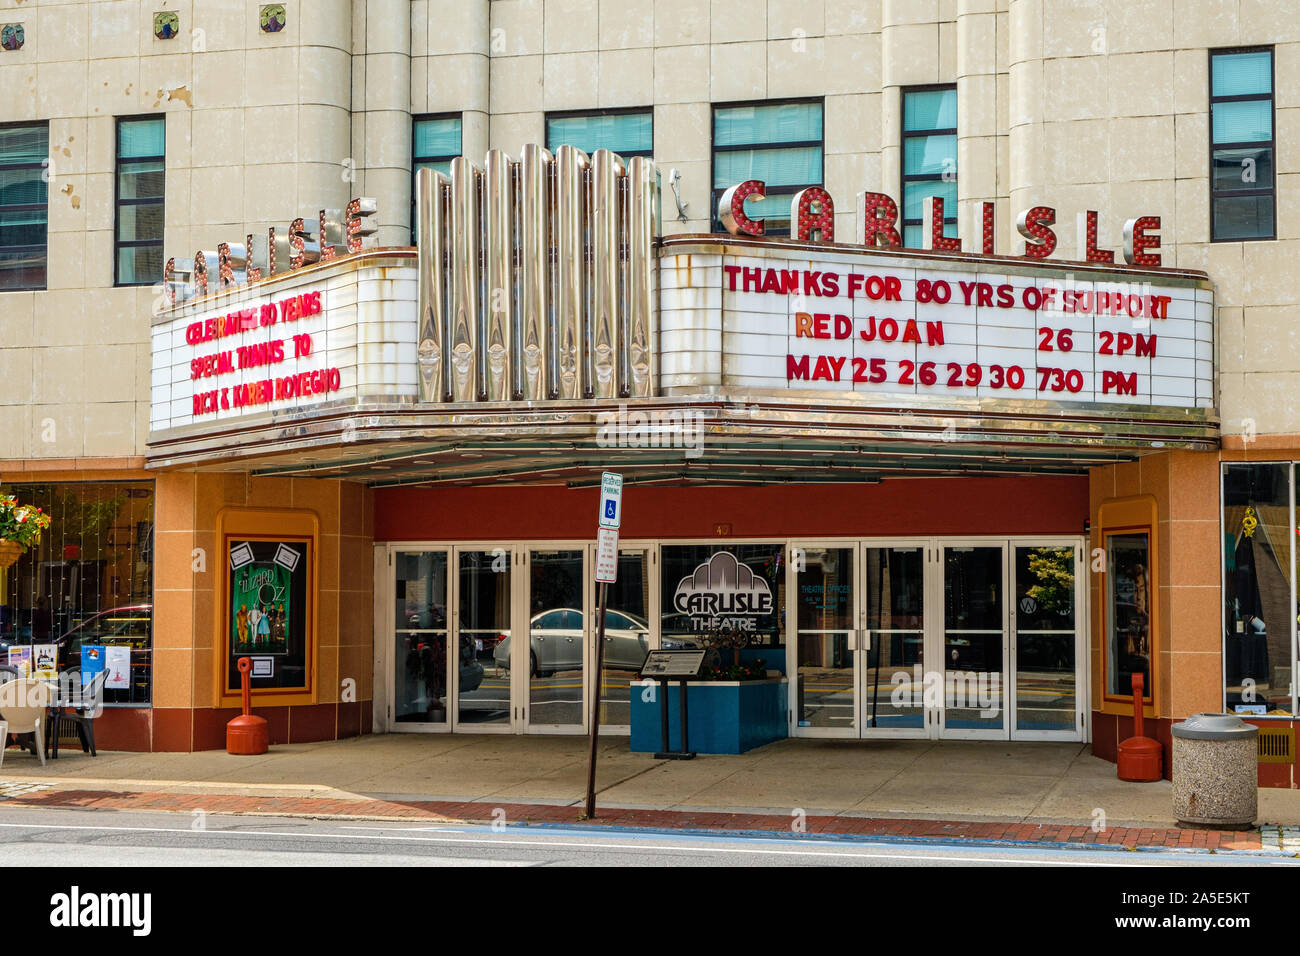 Carlisle Theatre, 40 West High Street, Carlisle, Pennsylvania Stock Photo